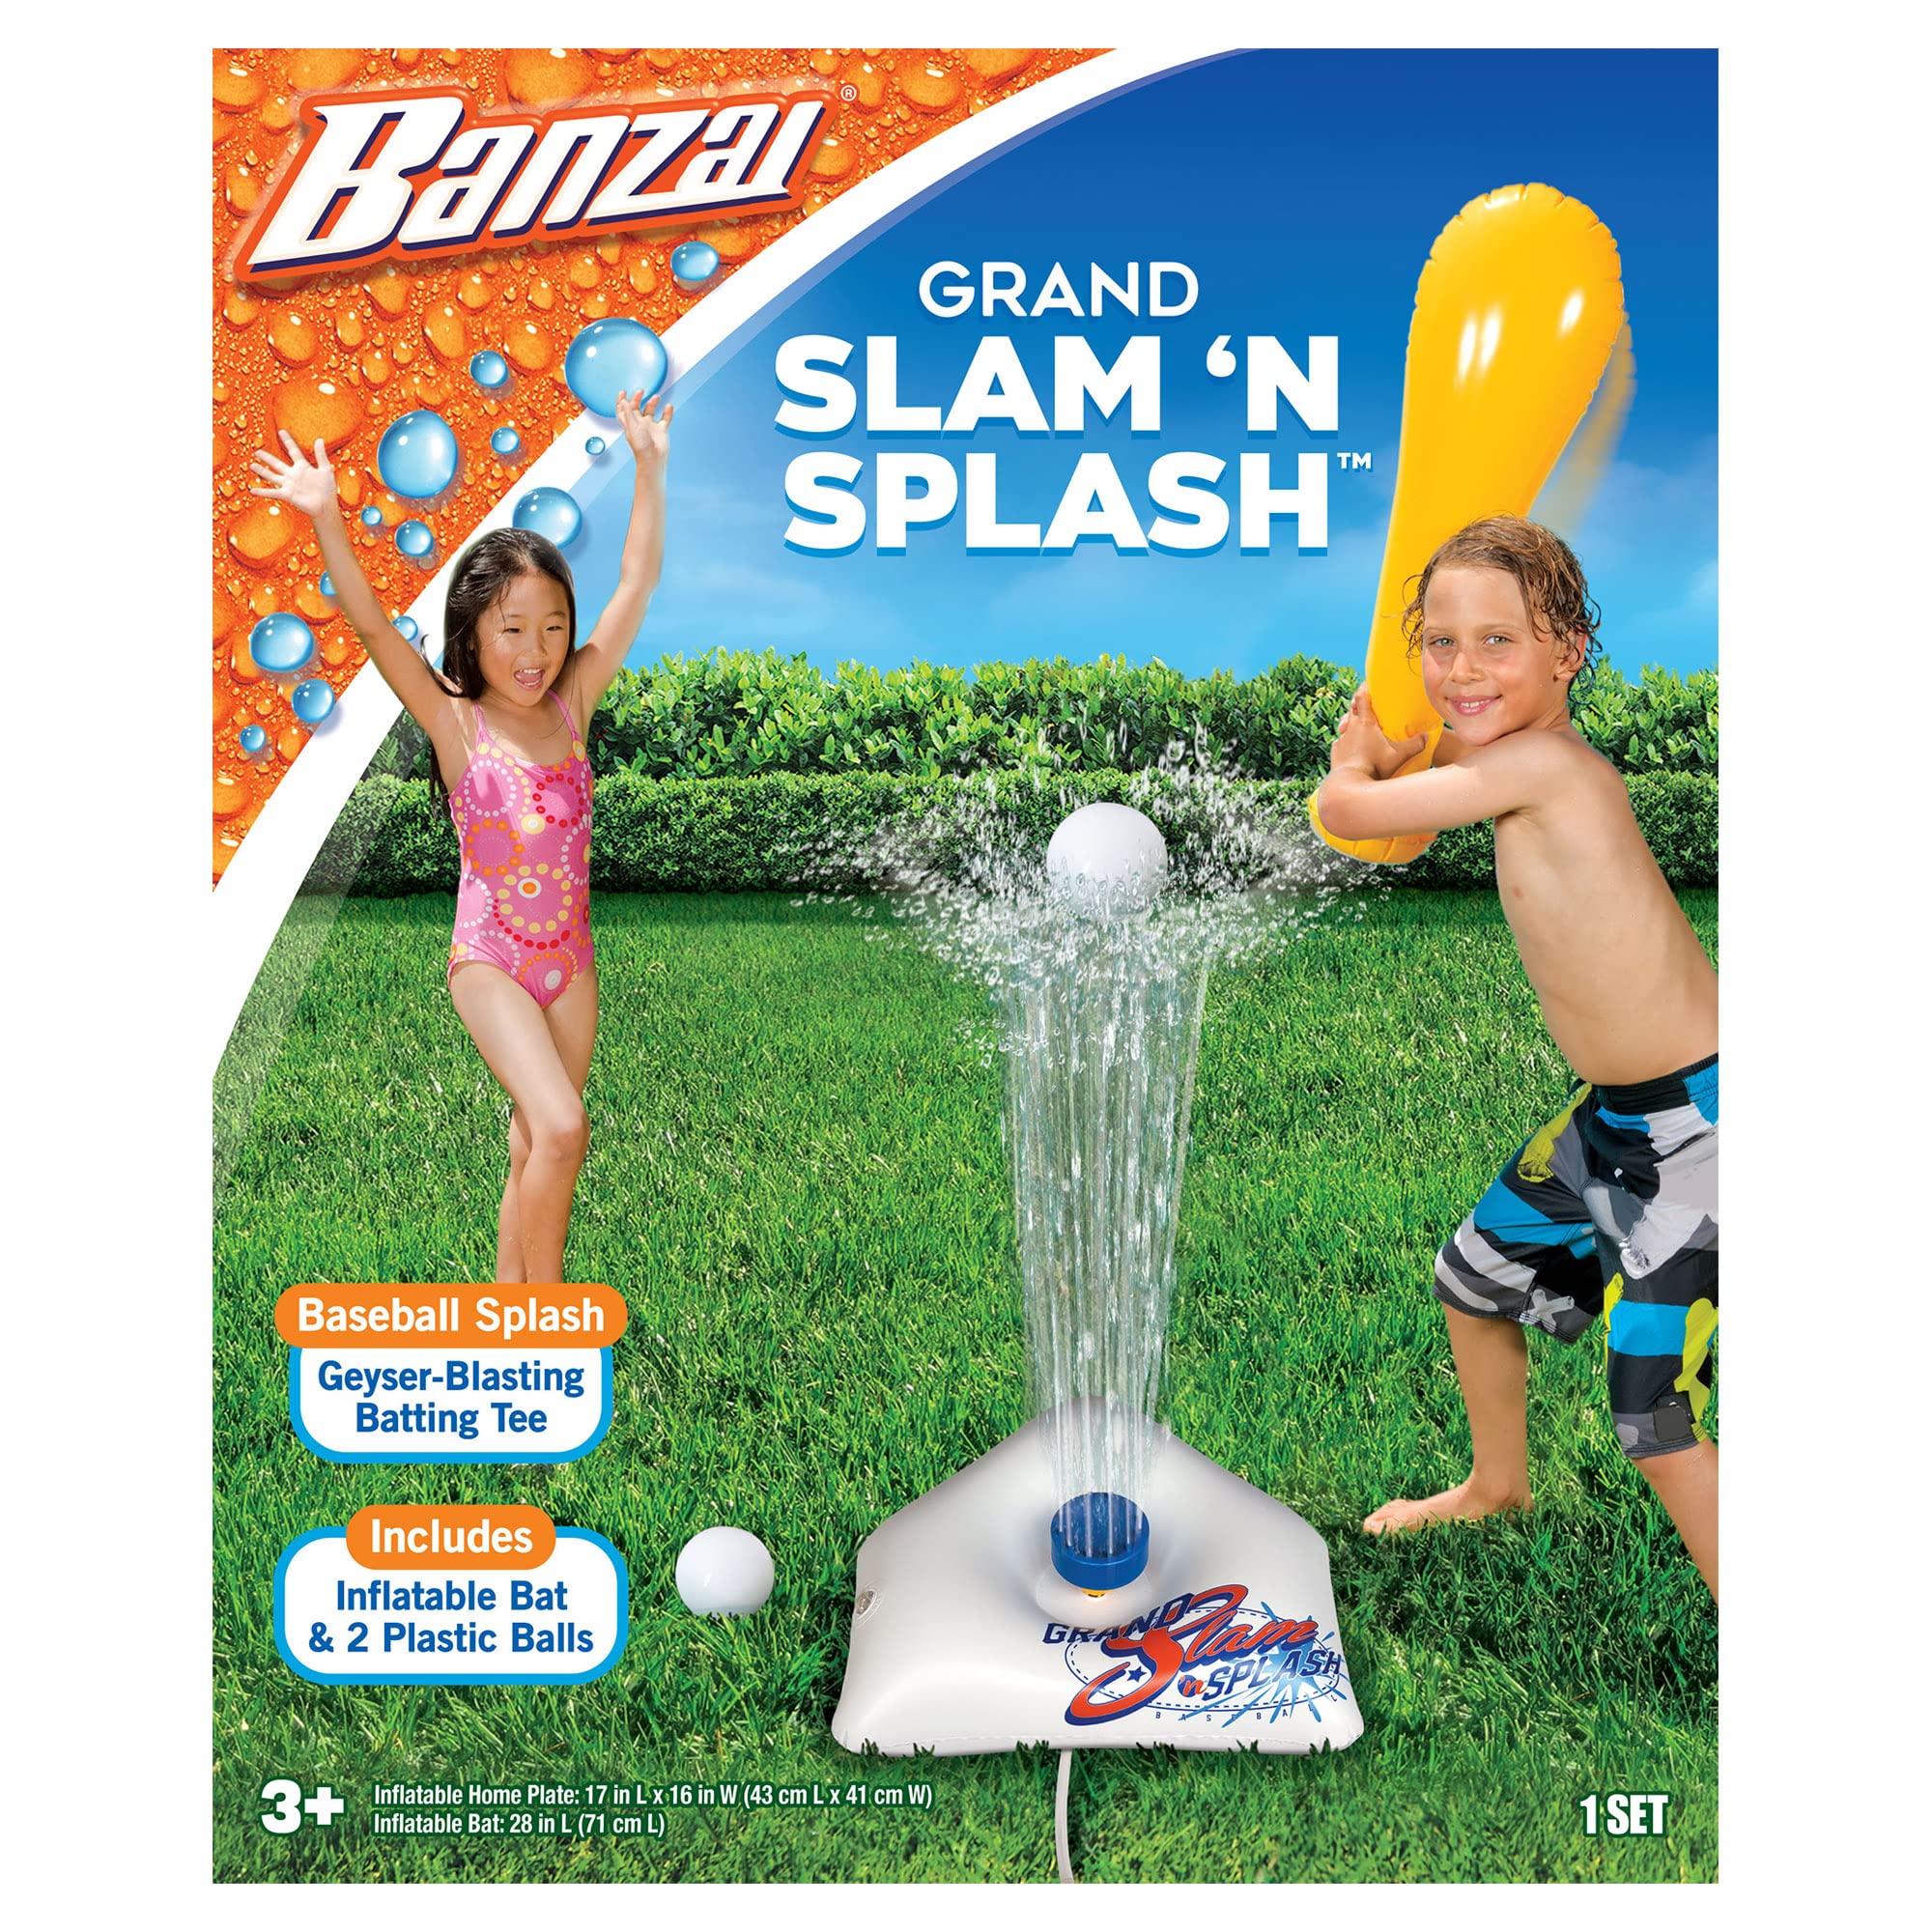 Banzai Grand Slam N Splash Sprinkler Baseball Game w/ Inflatable Bat & Balls $6.49 + Free Ship to Store Pickup at Walgreens